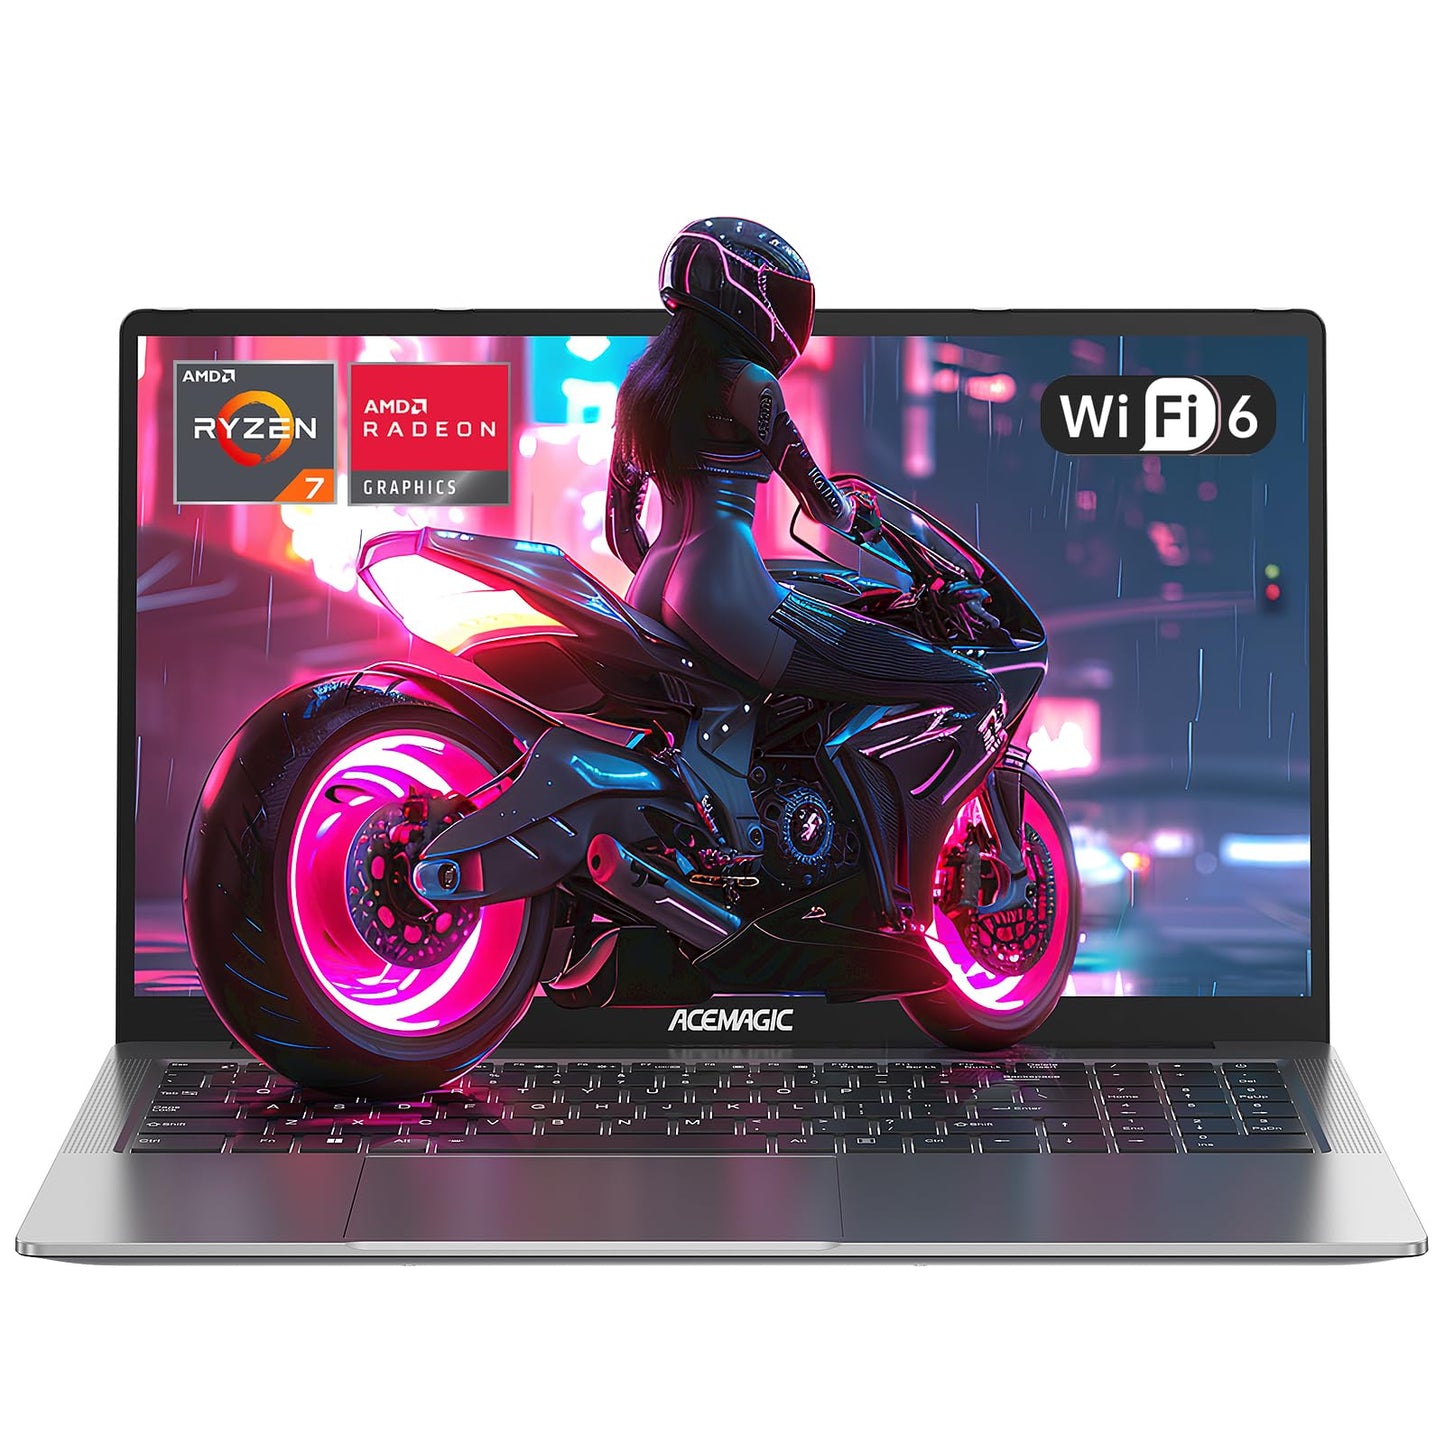 ACEMAGIC Gaming Laptop AMD Ryzen 7 5700U(8C/16T), Radeon RX Vega 8 Graphics,16.1“FHD Display,16GB RAM 512GB NVMe SSD Laptop Computer with Backlit KB,Type_C (Full Function),WiFi 6, 53Wh Battery